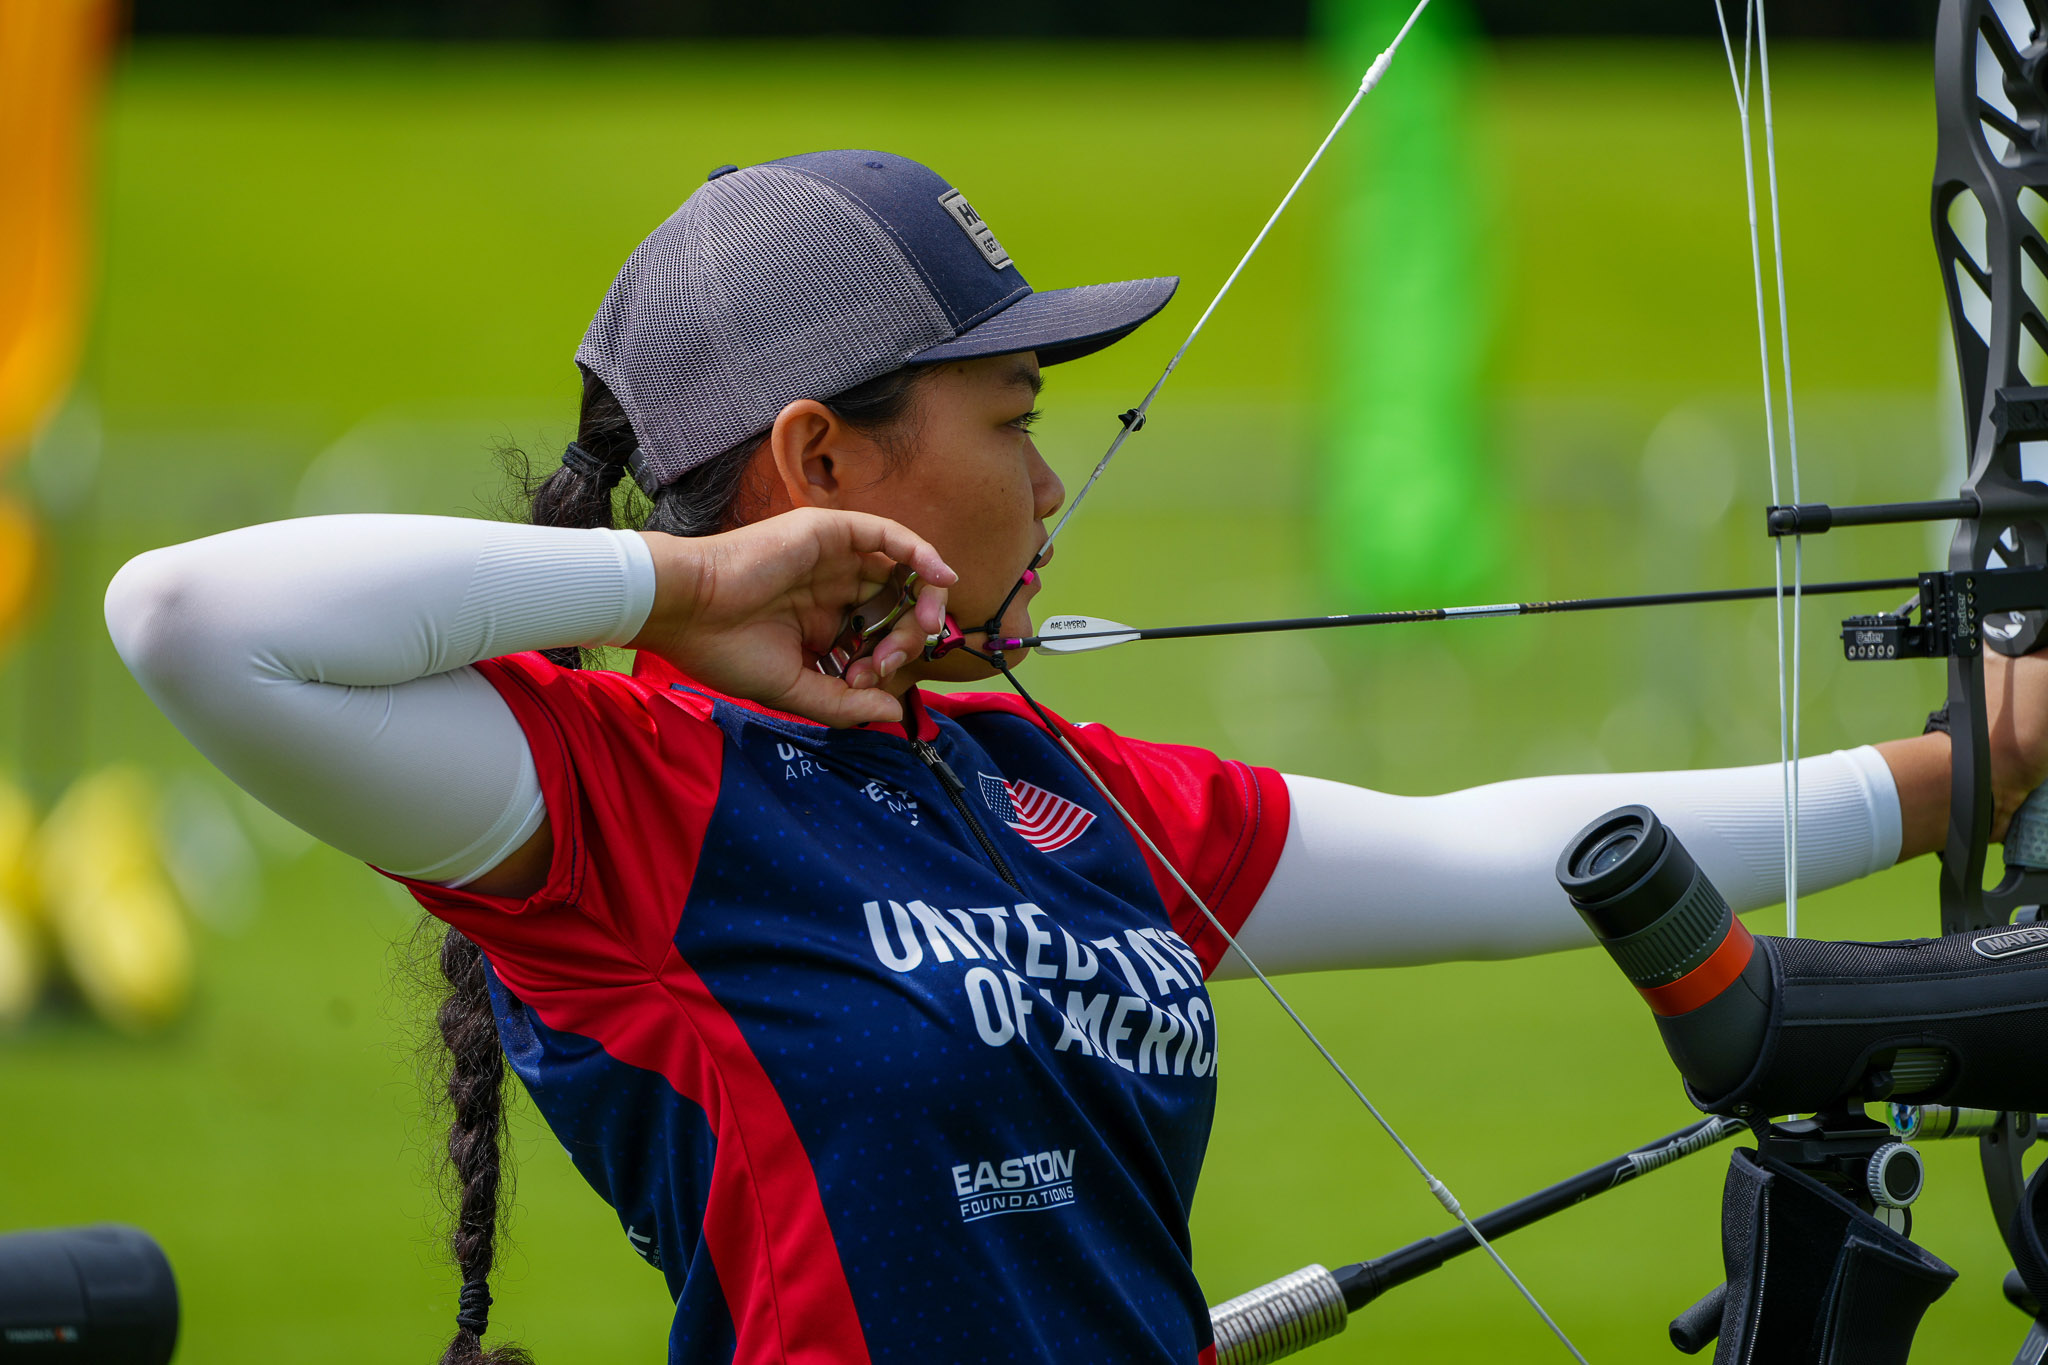 Limerick 2023 World Archery Youth Championships